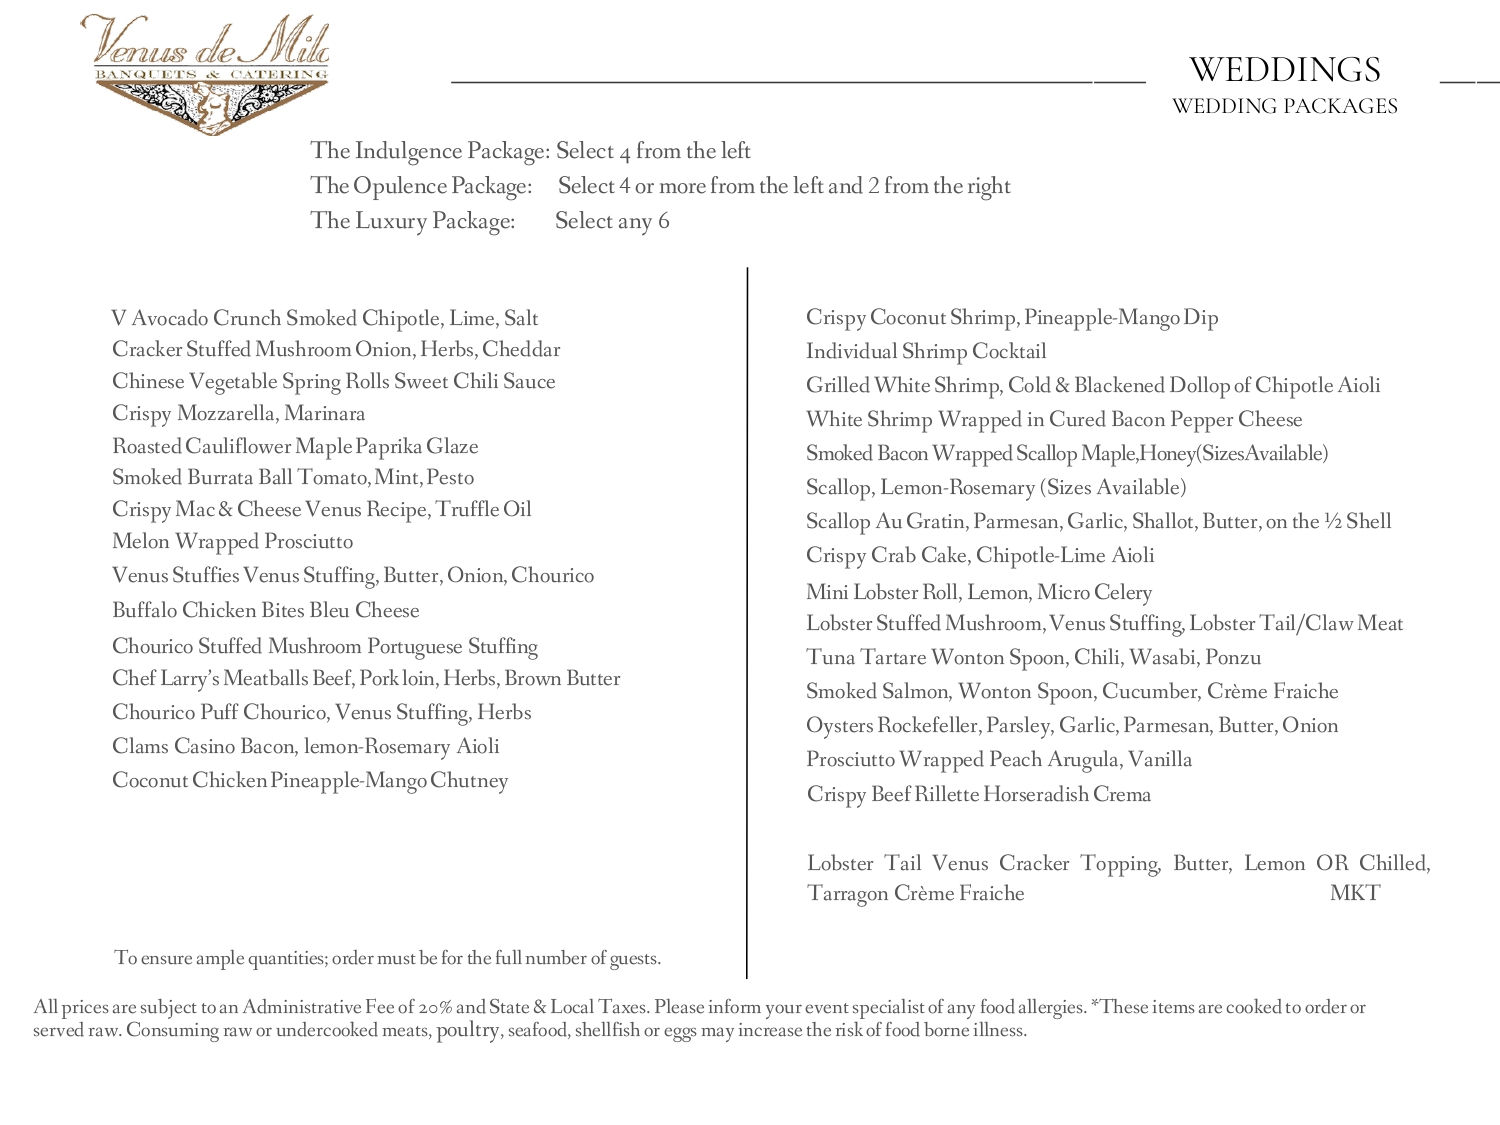 Wedding menu page 11